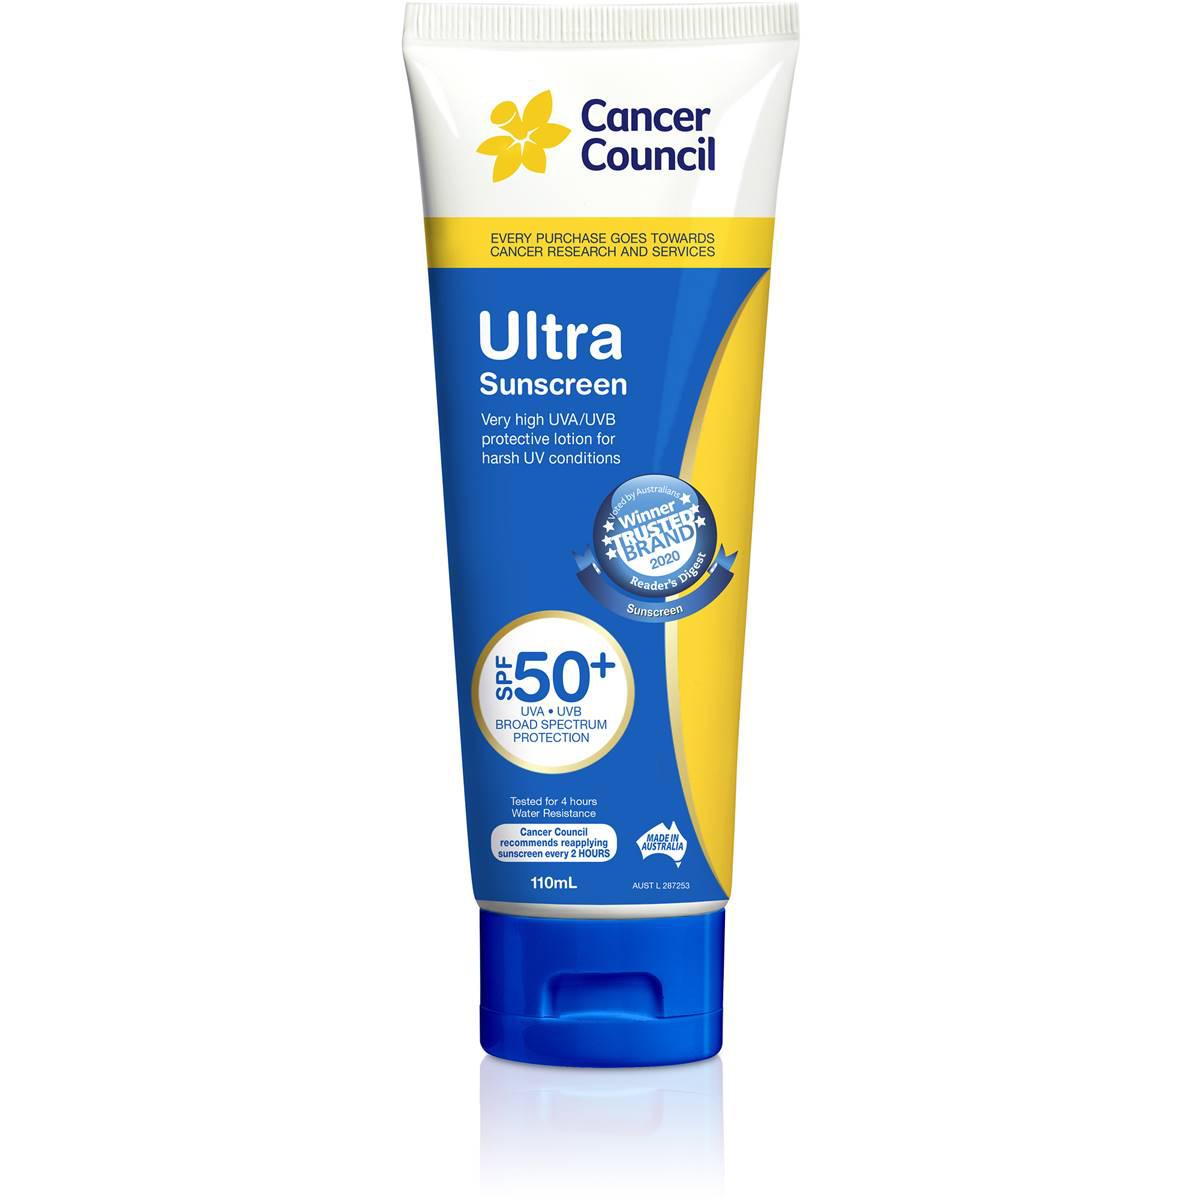 Cancer Council Ultra Spf 50+ Sunscreen 110ml